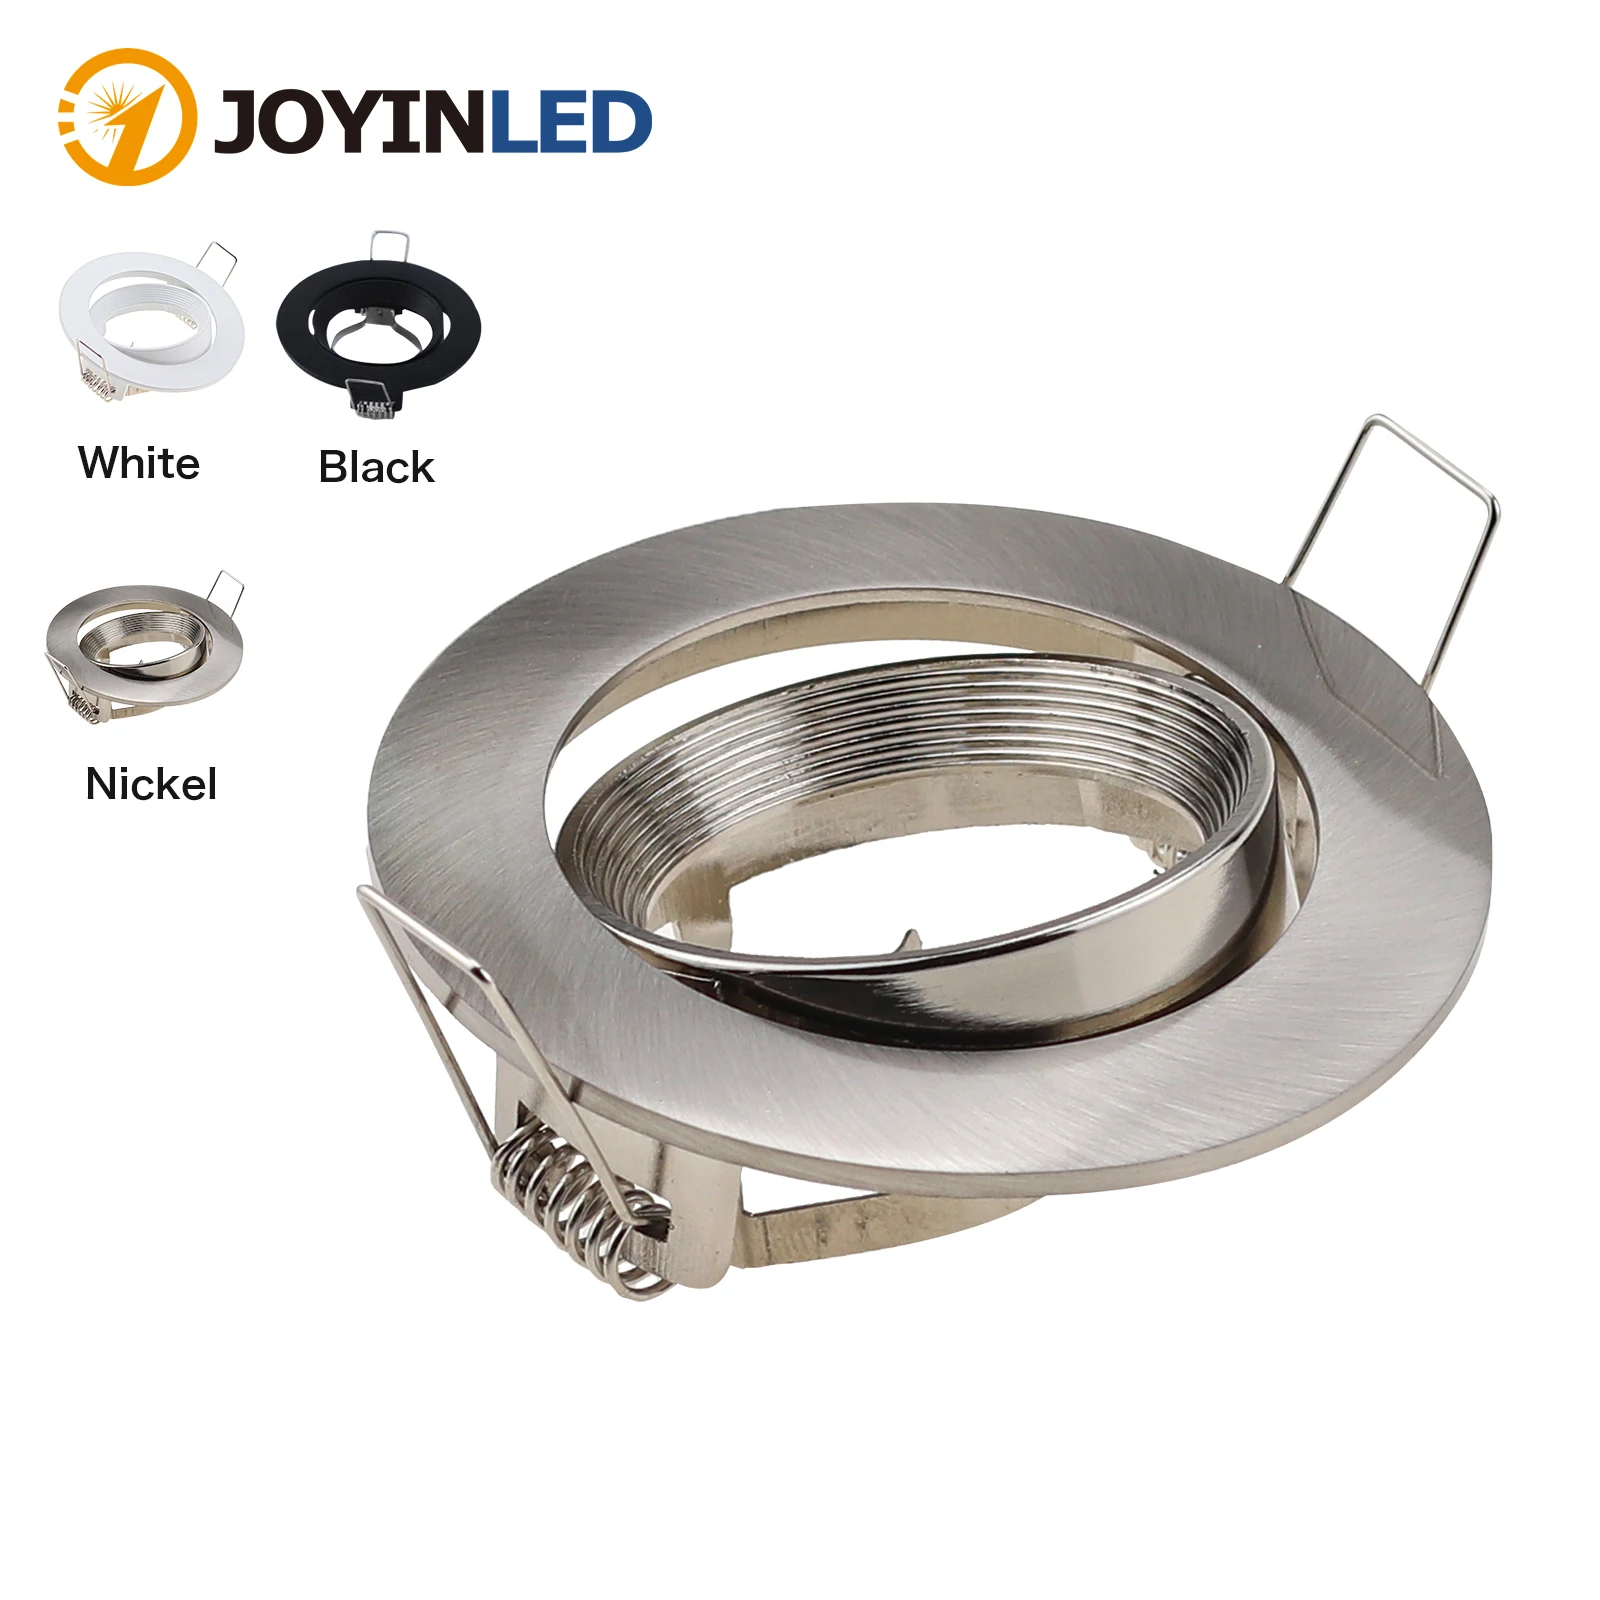 Zine alloy GU10/ MR16 Satin Nickel LED Downlight lamp holder fixture trims